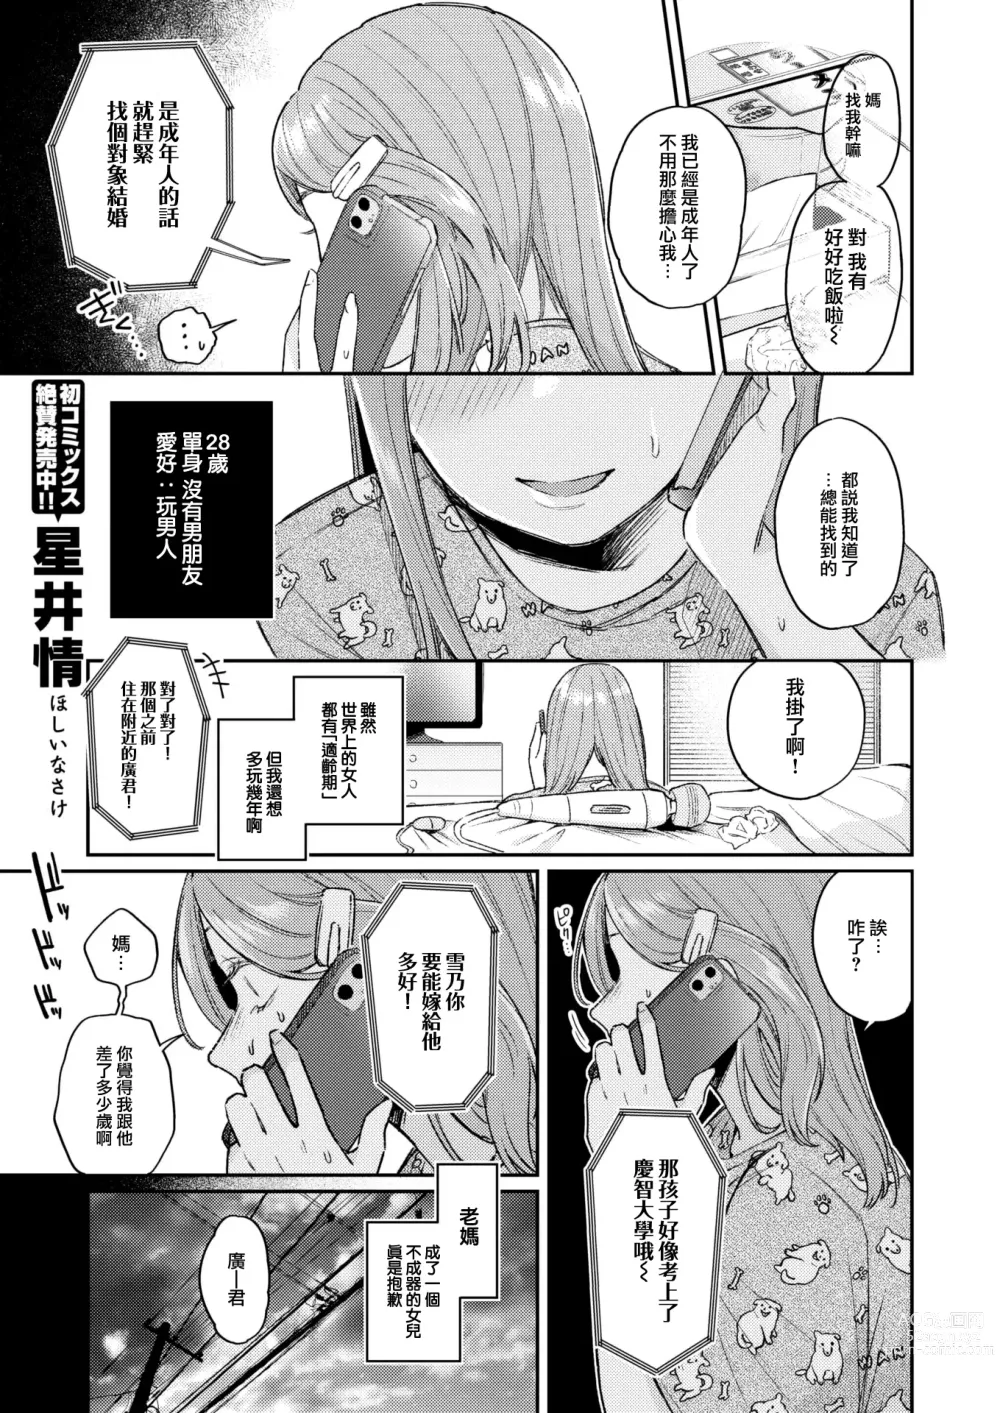 Page 2 of manga Katsute Oneshotadatta Bokura